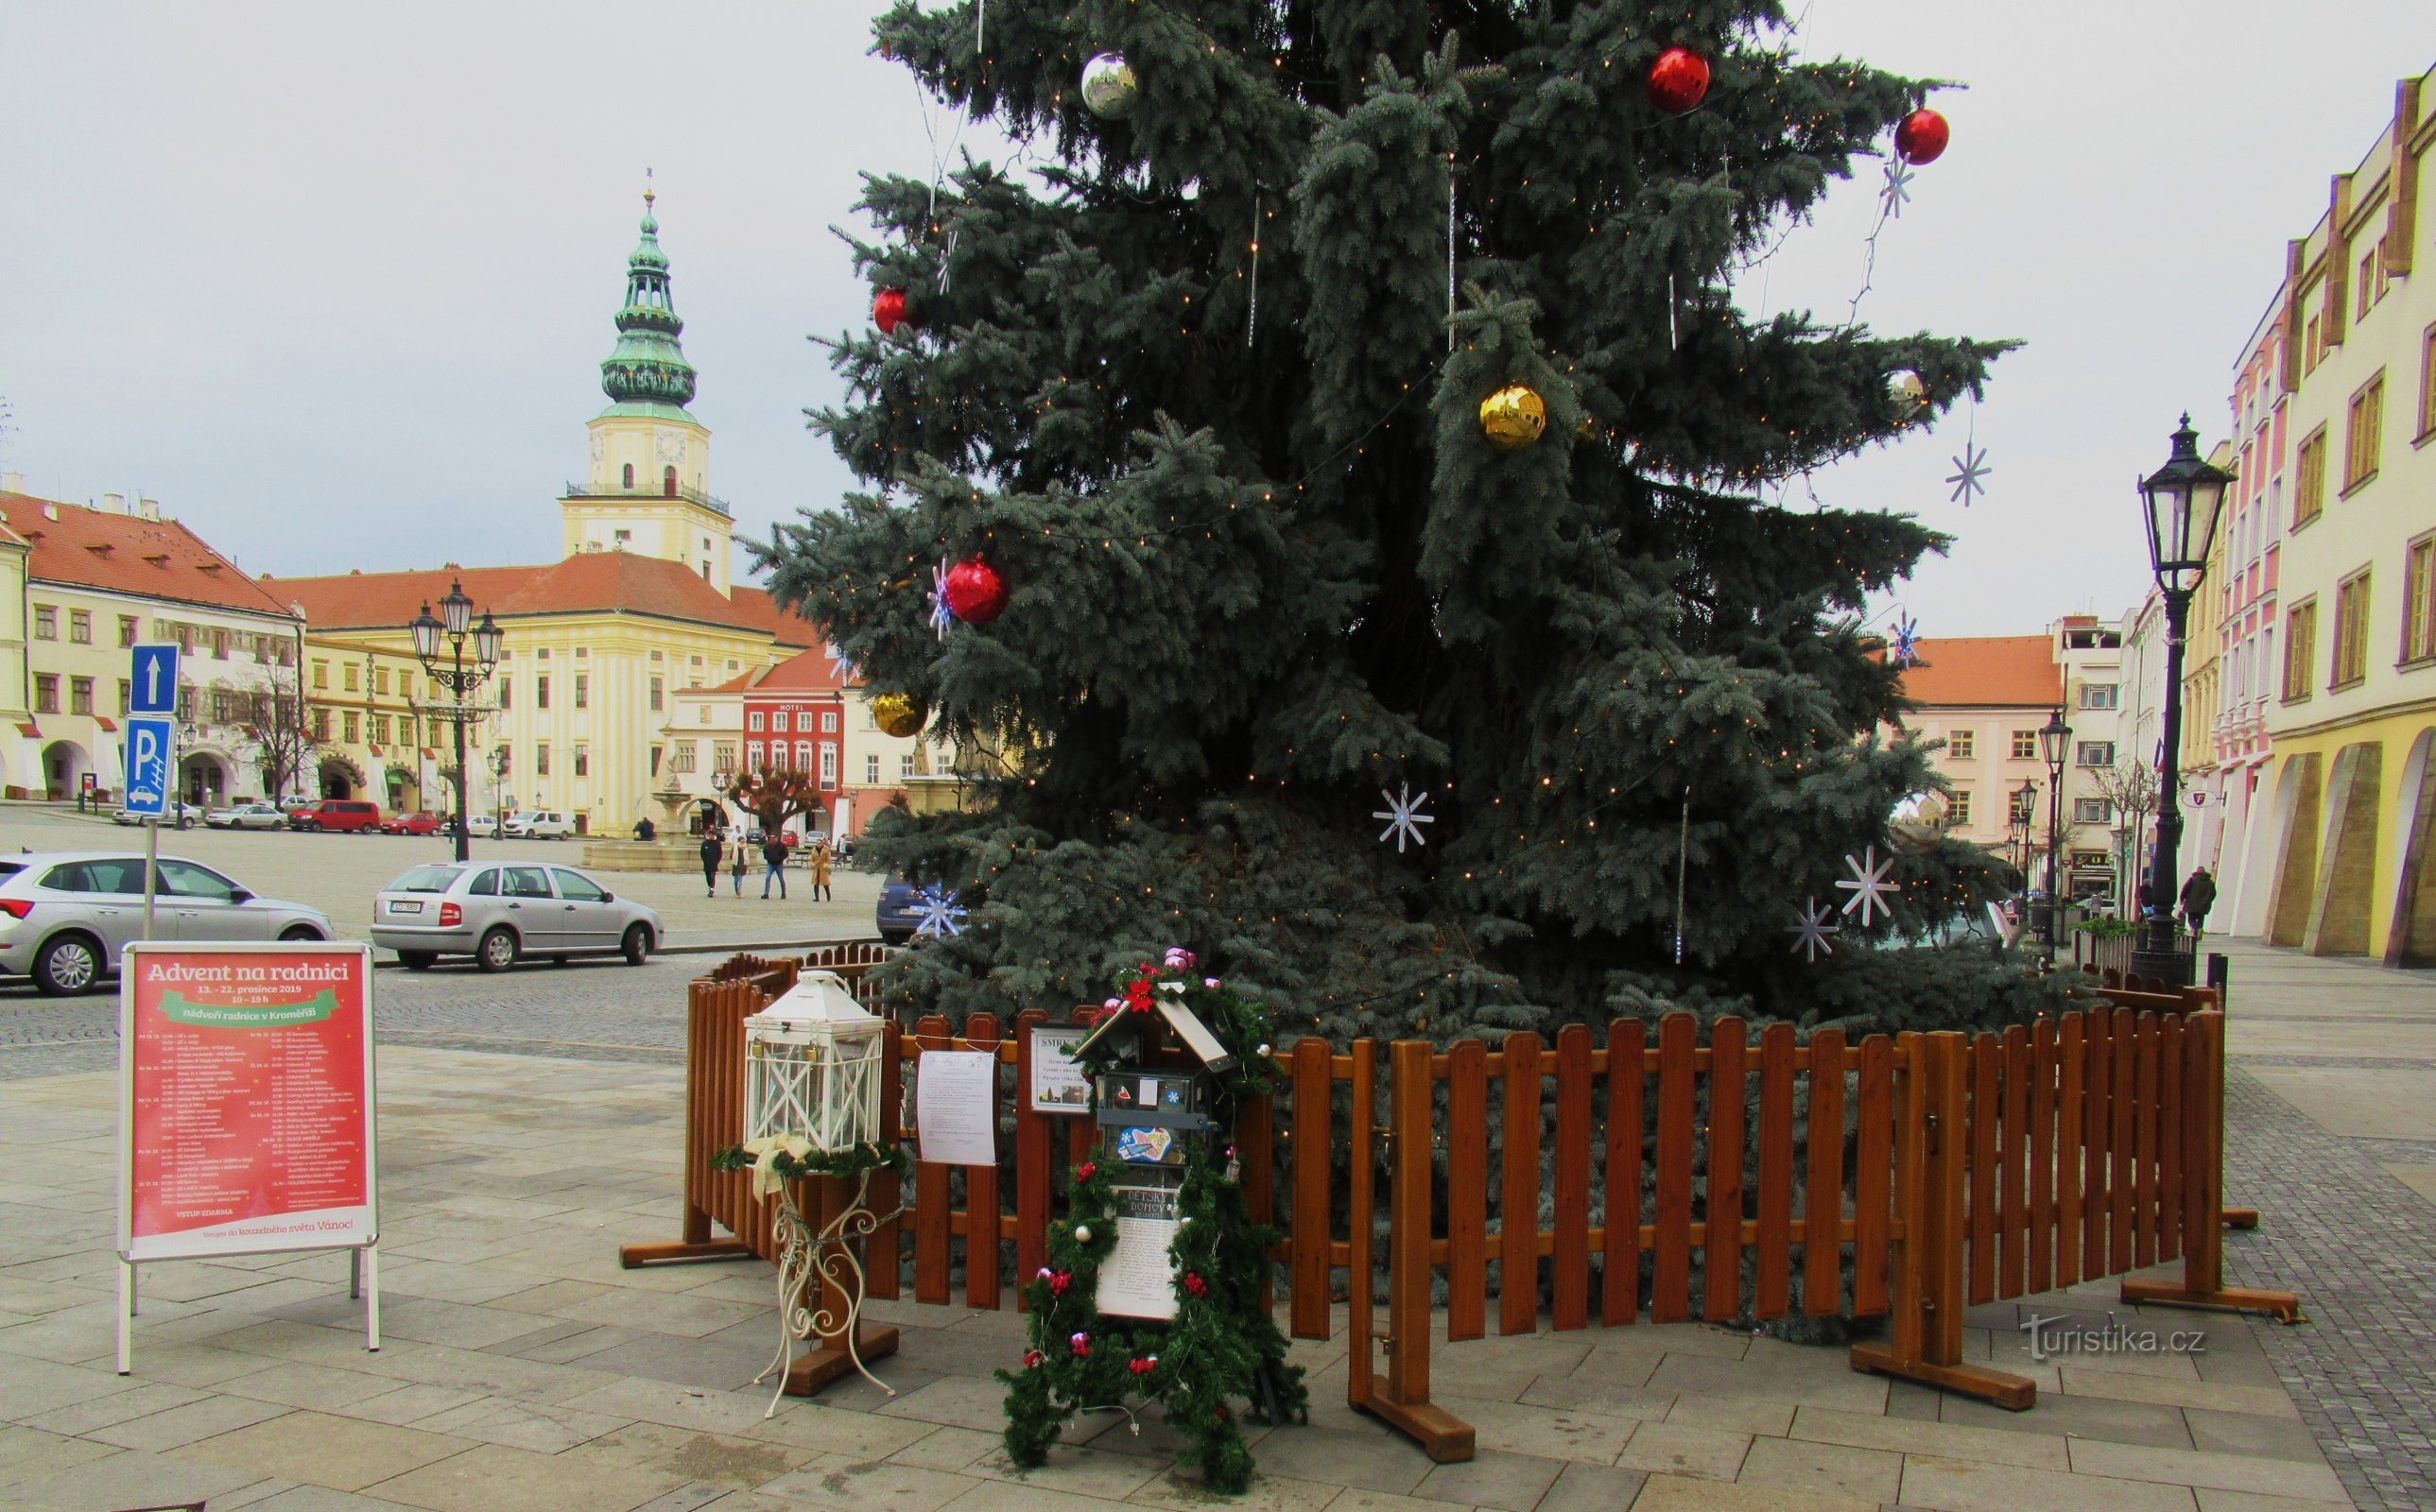 Adventspaziergang durch die Stadt Kroměříž